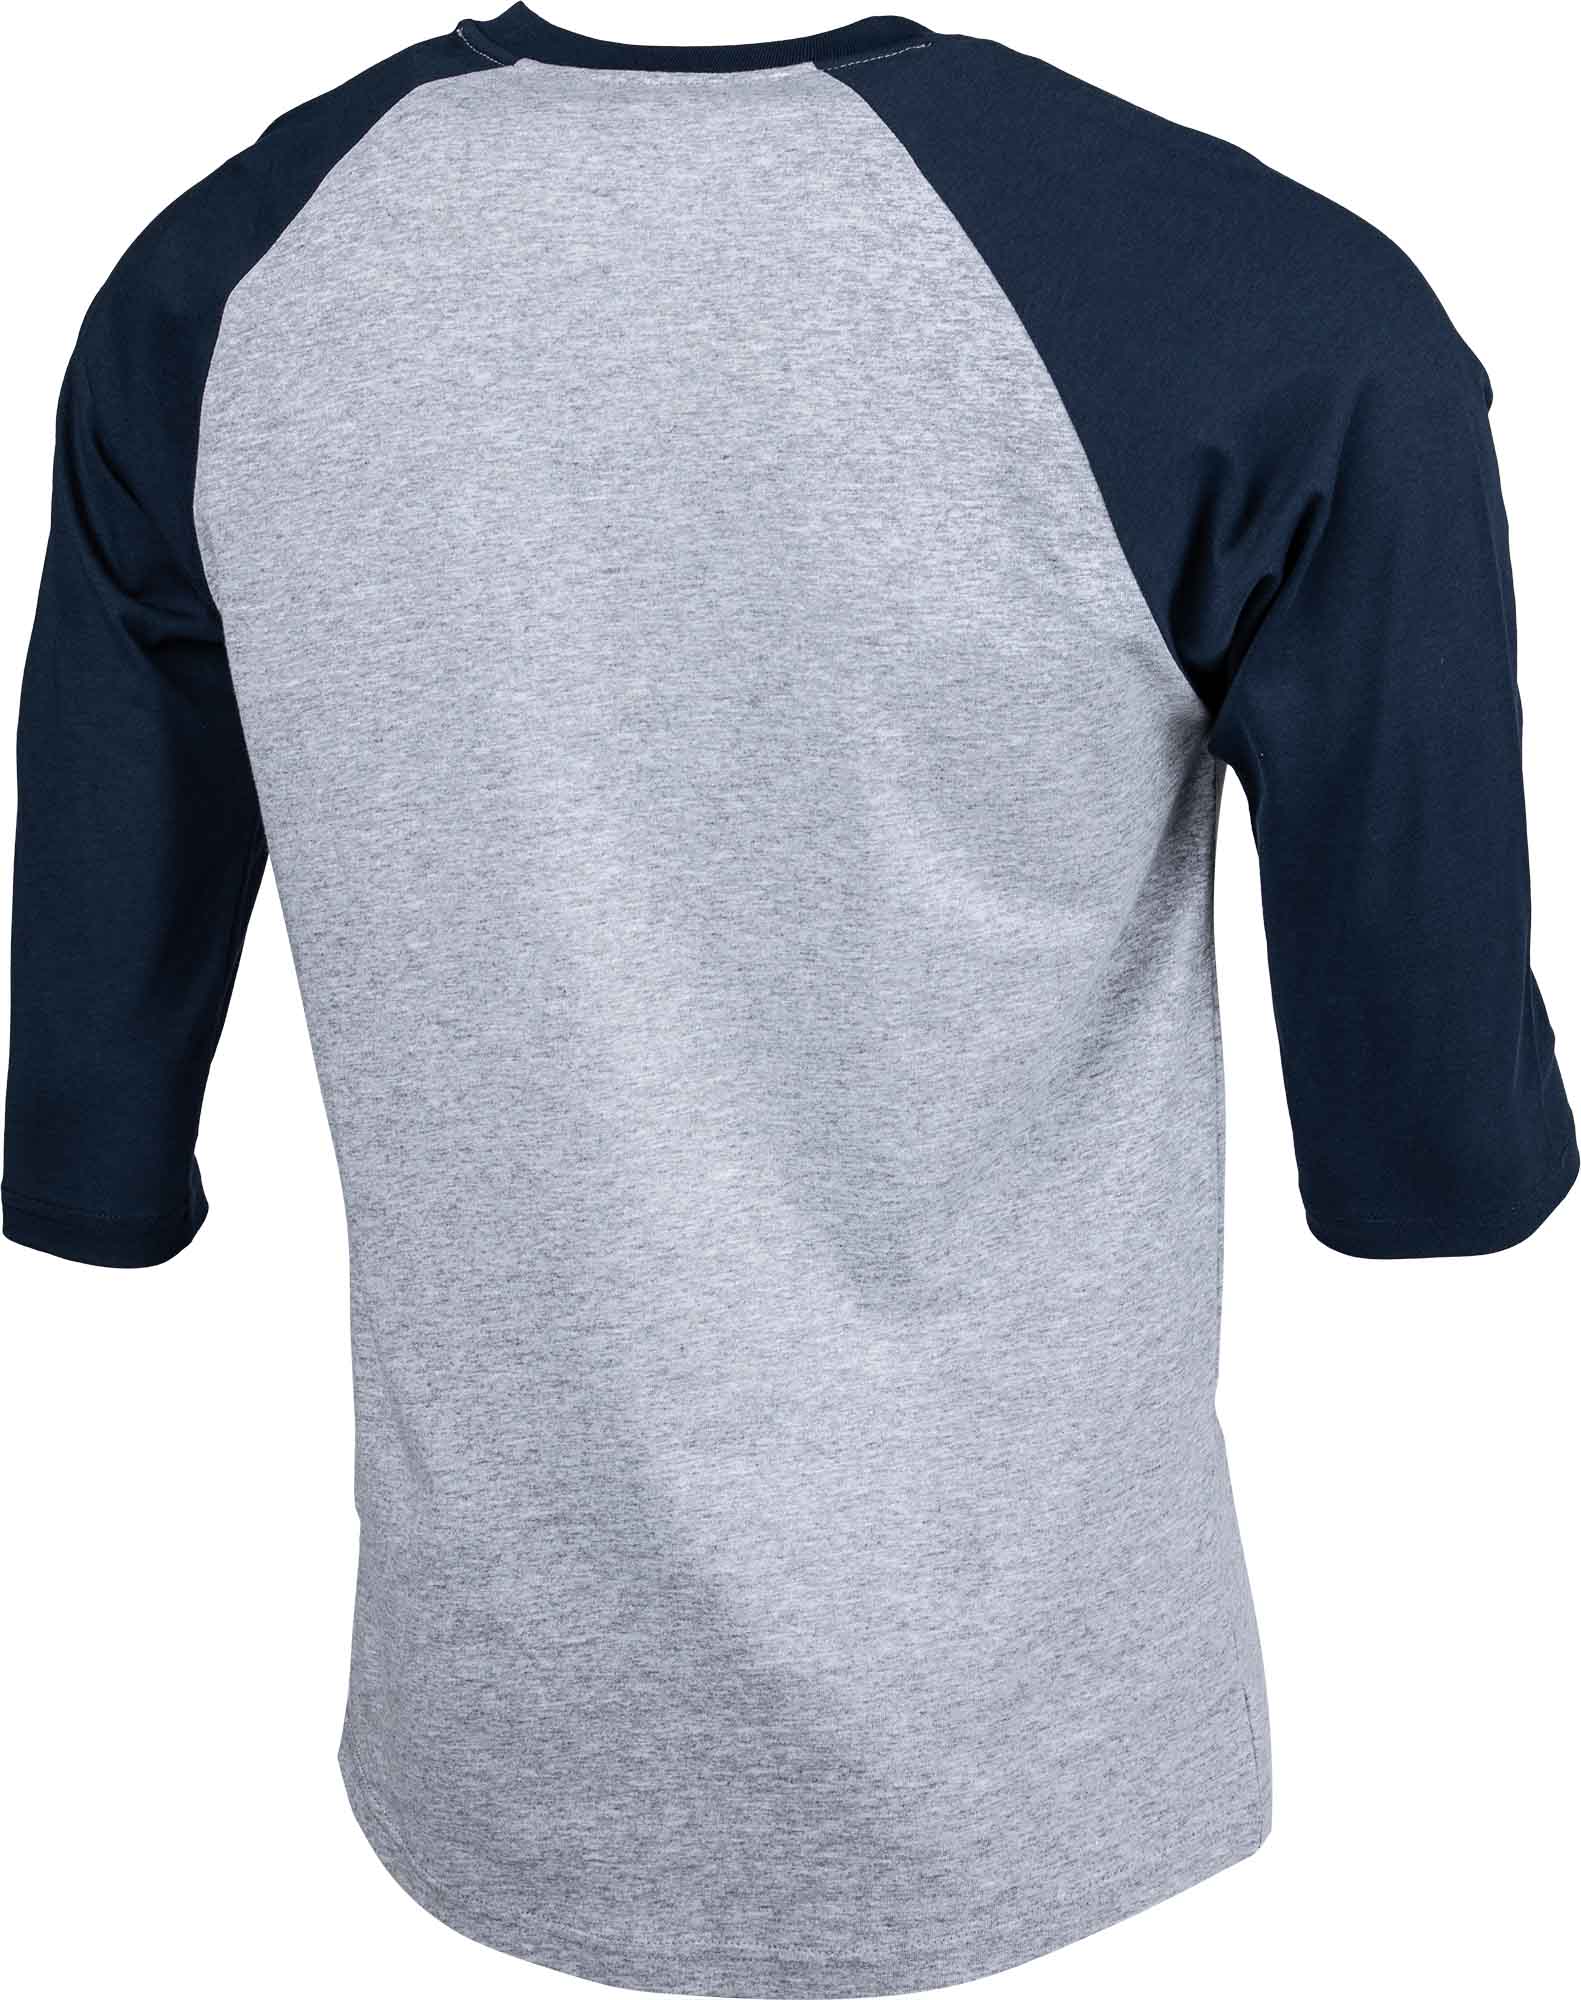 Men’s 3/4 length sleeve T-shirt